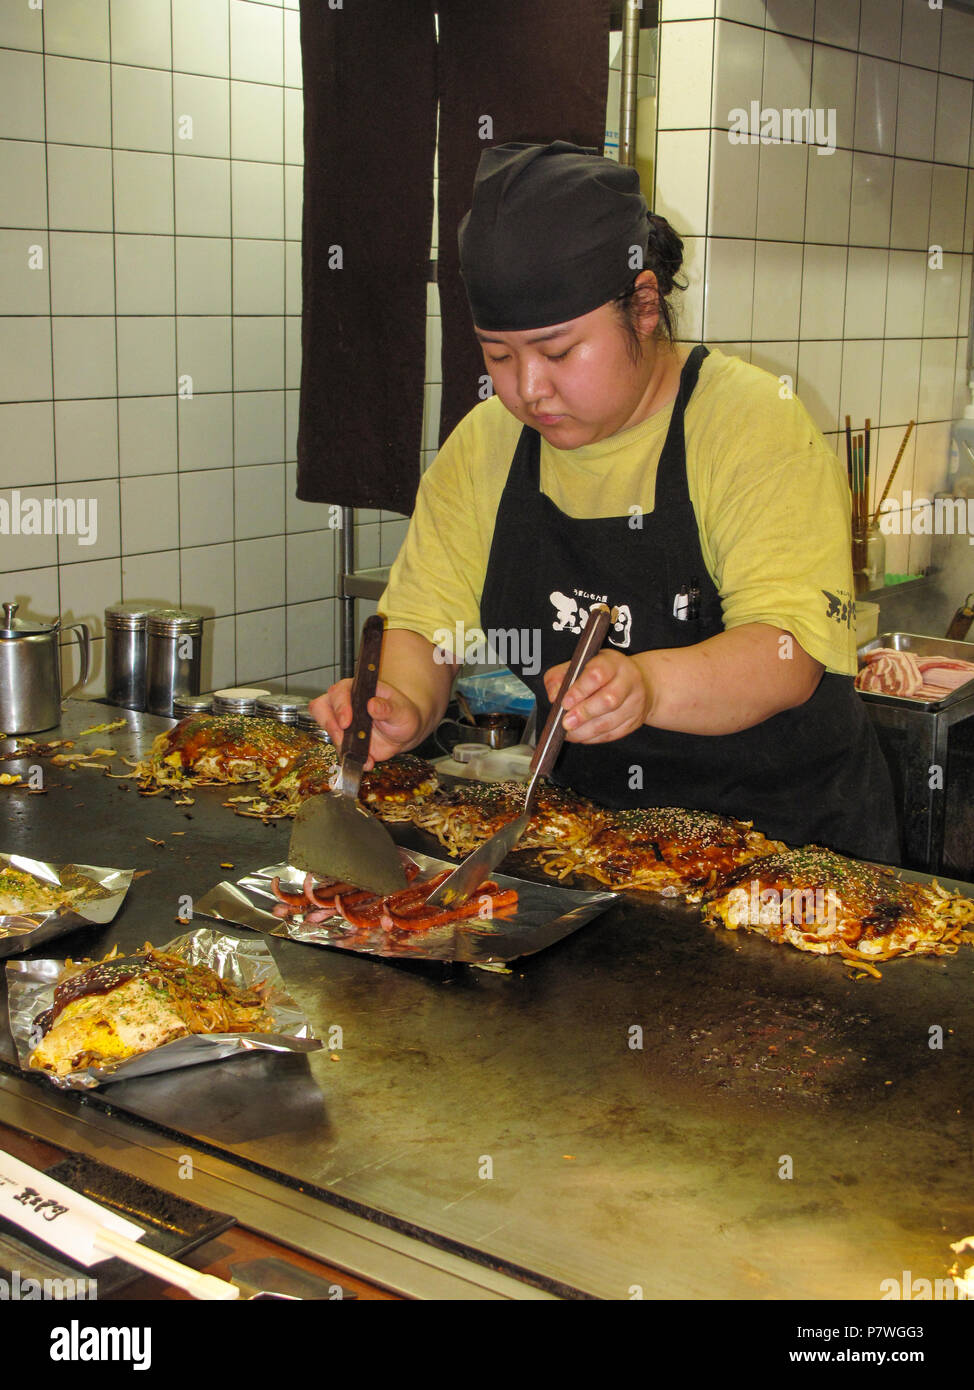 Restaurant kitchen, staff cooking Okonomiyaki savoury pancakes Stock Photo